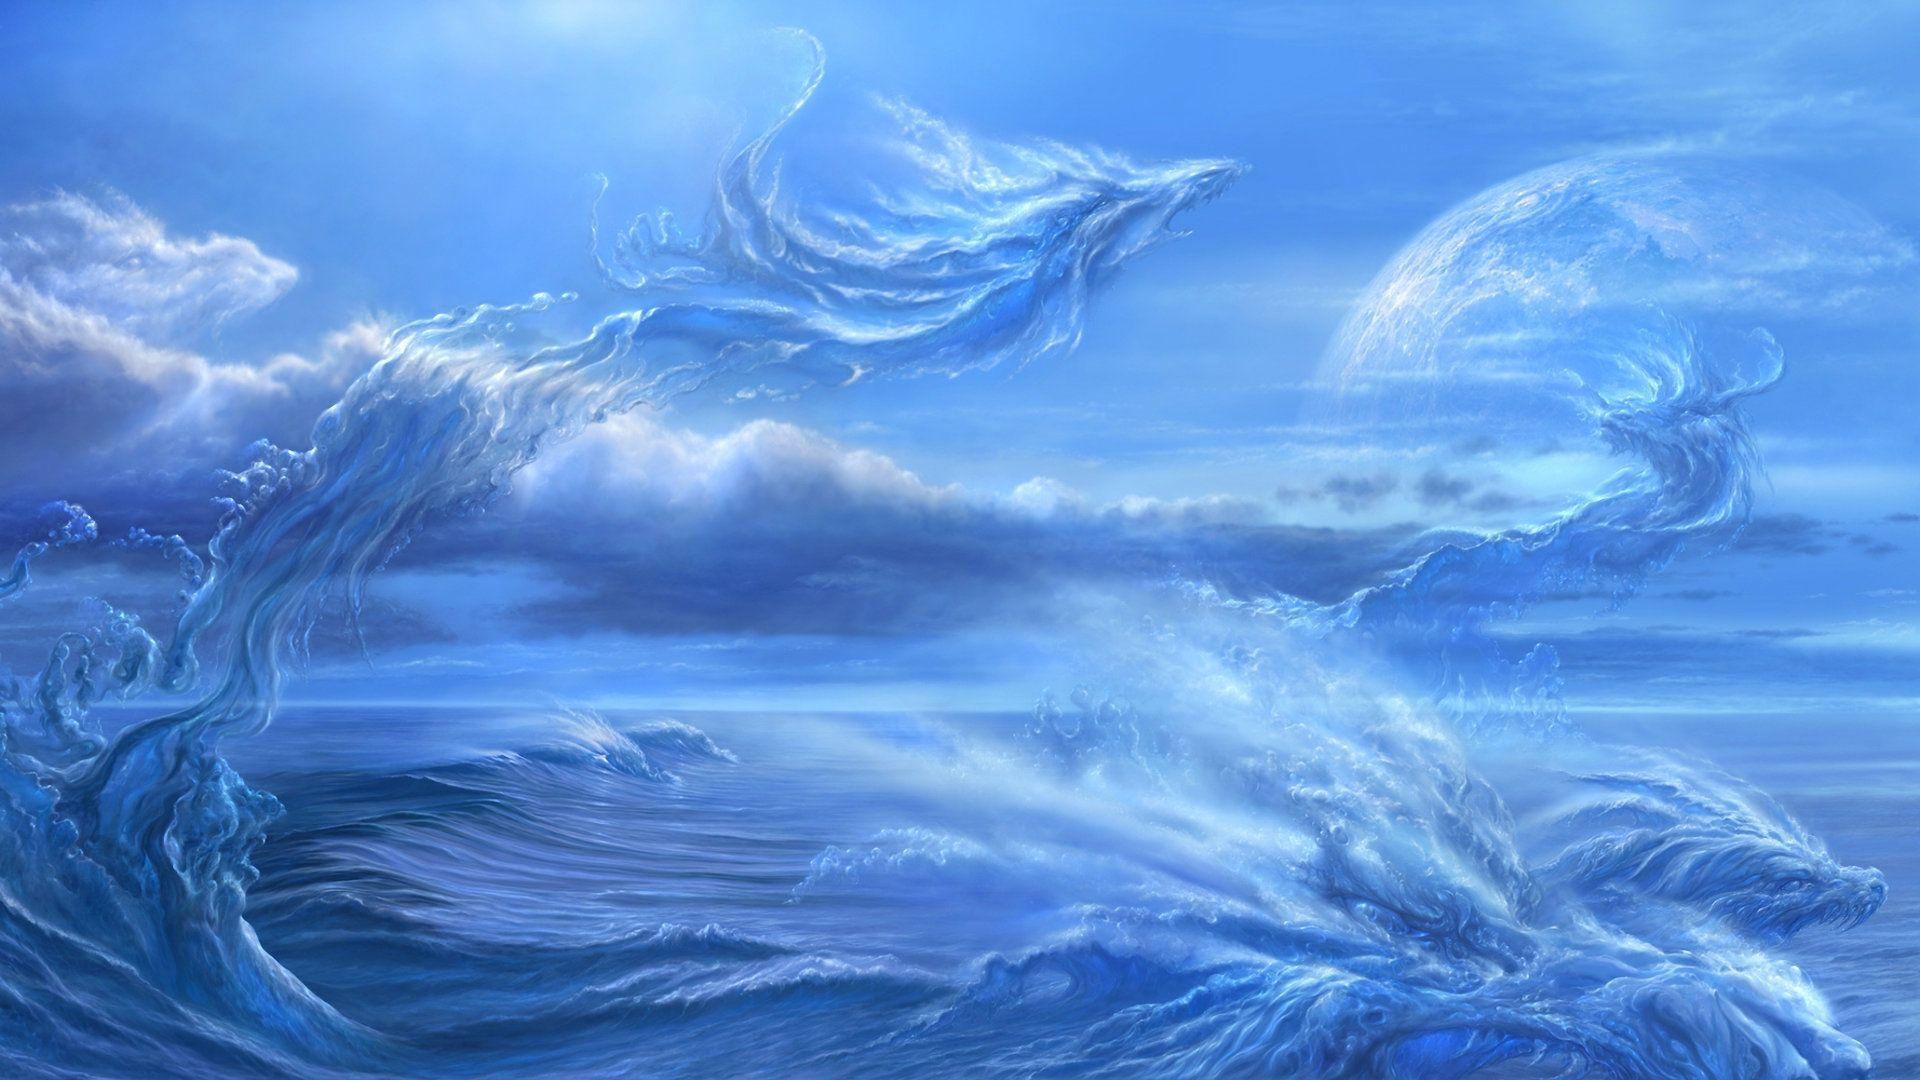 Water Dragon Wallpaper